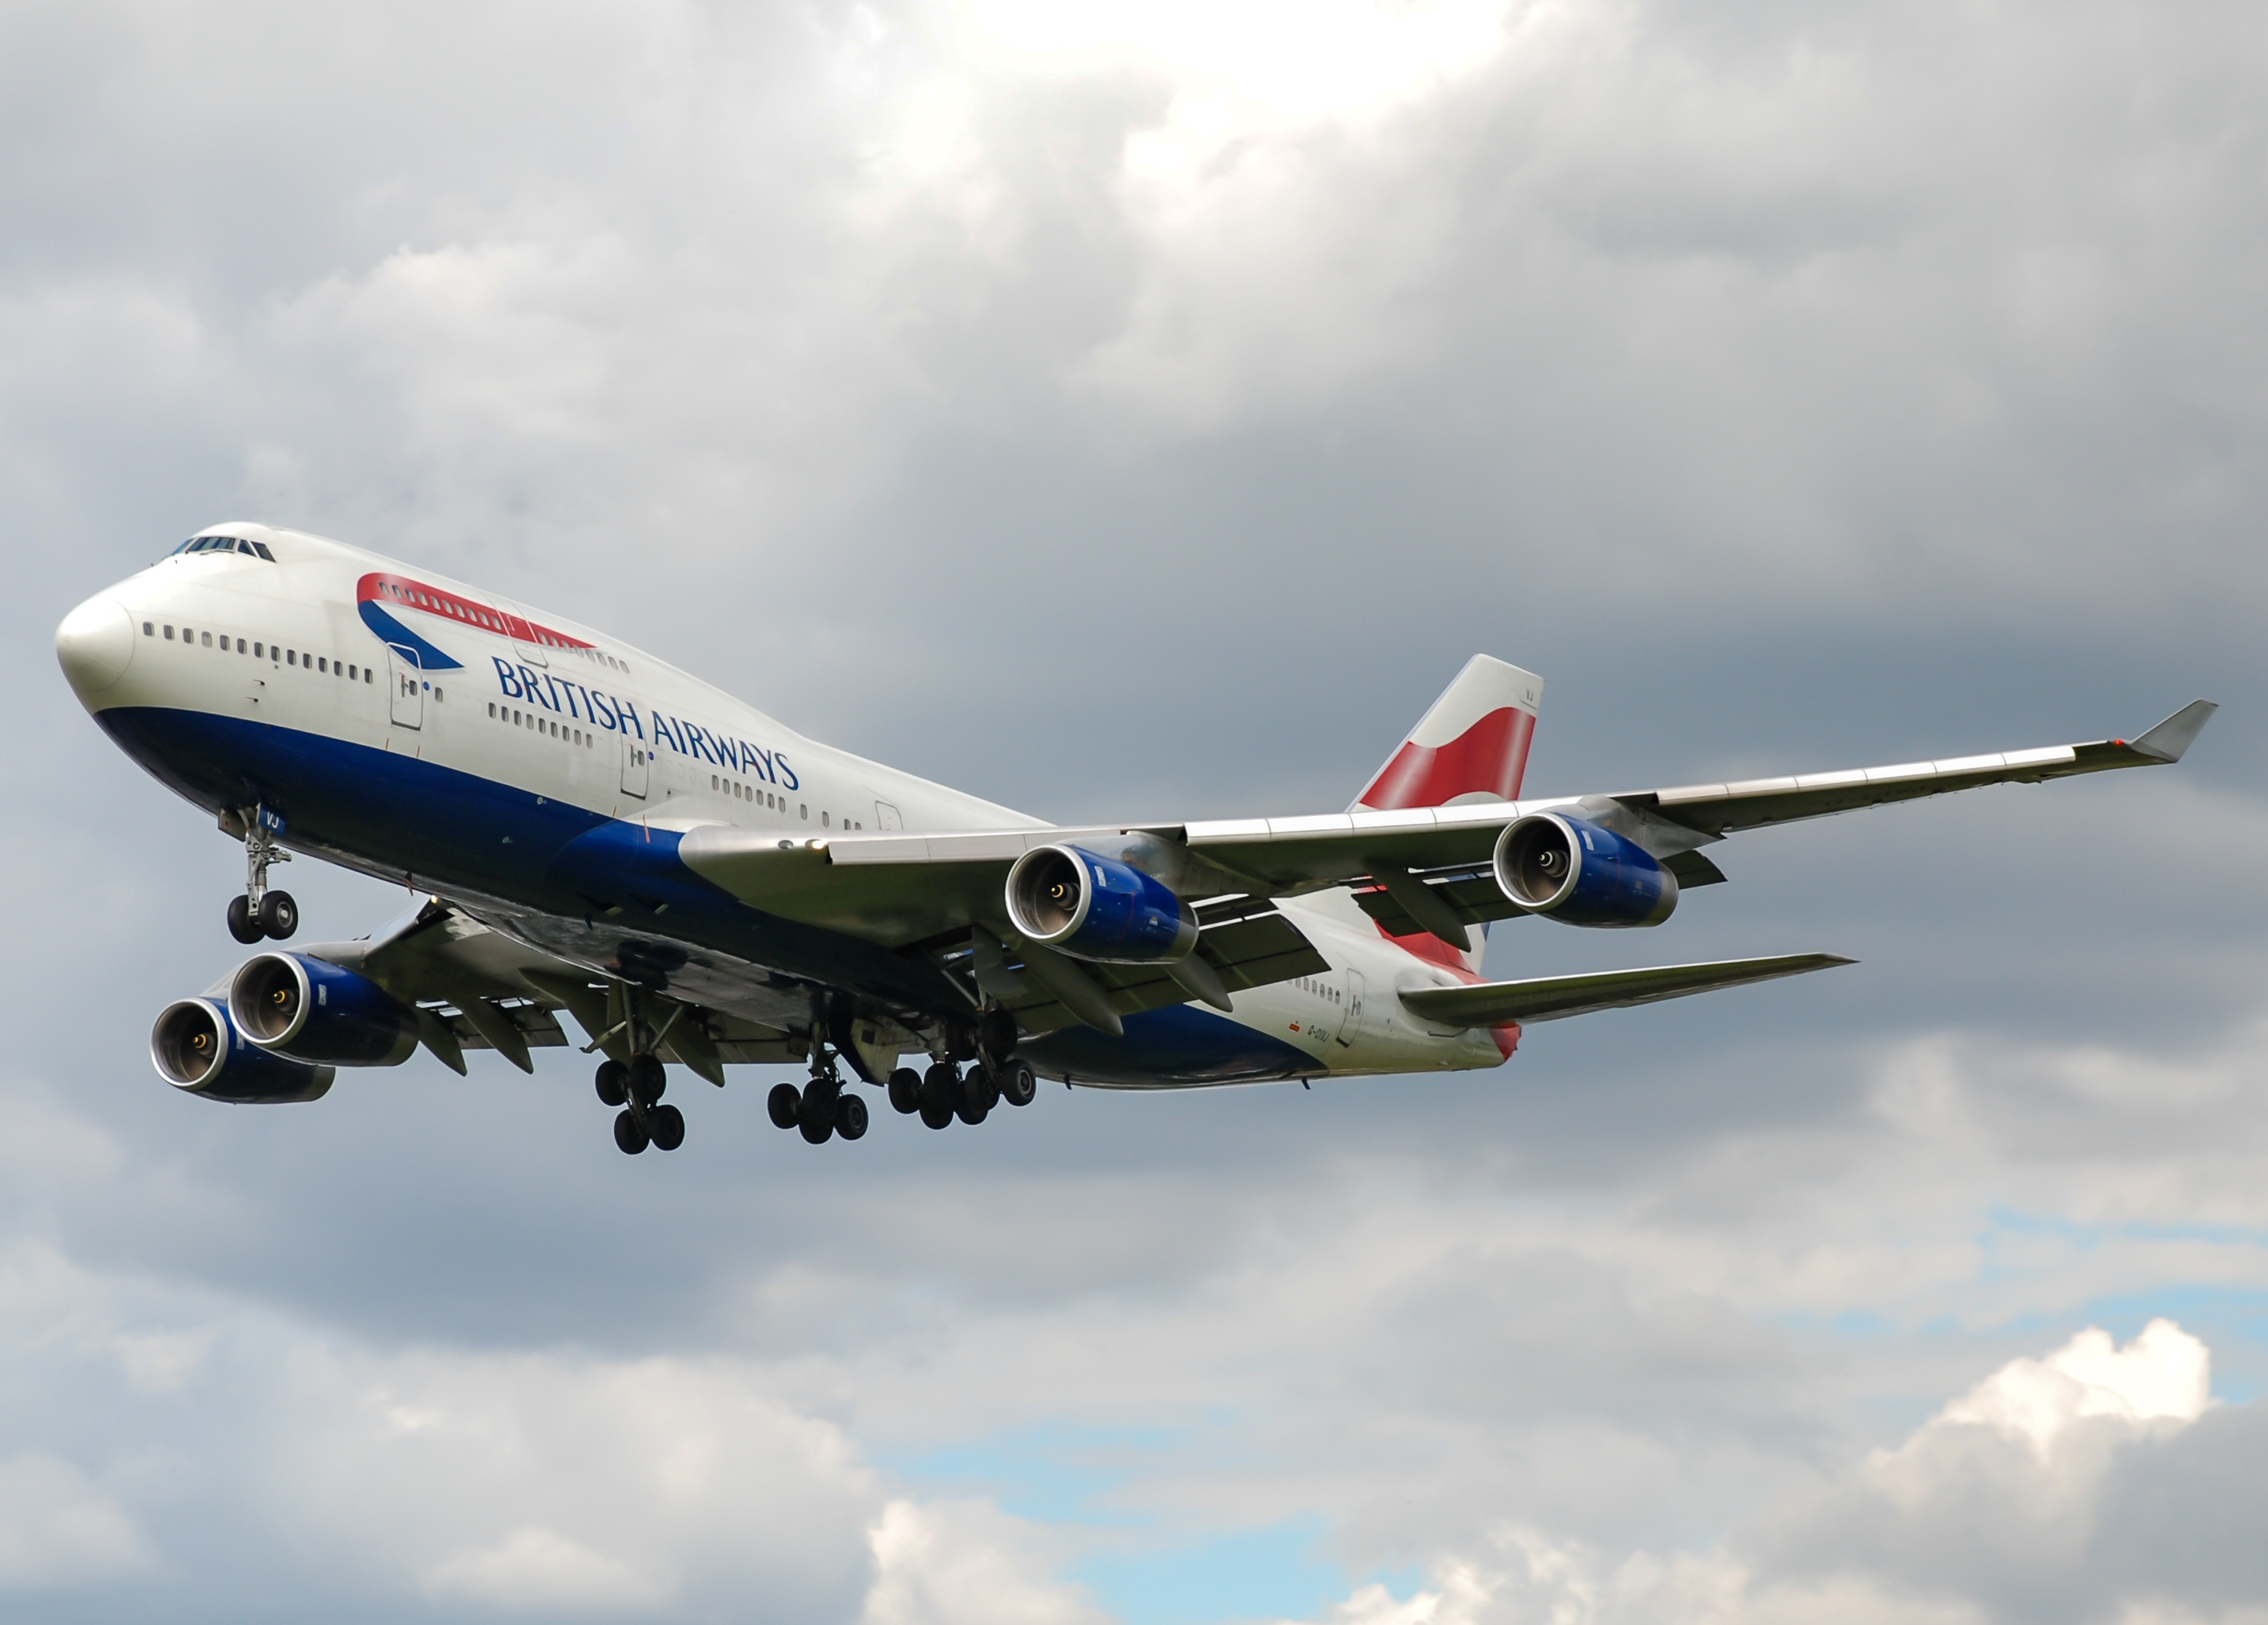 G-CIVJ/GCIVJ Withdrawn from use Boeing 747 Airframe Information - AVSpotters.com